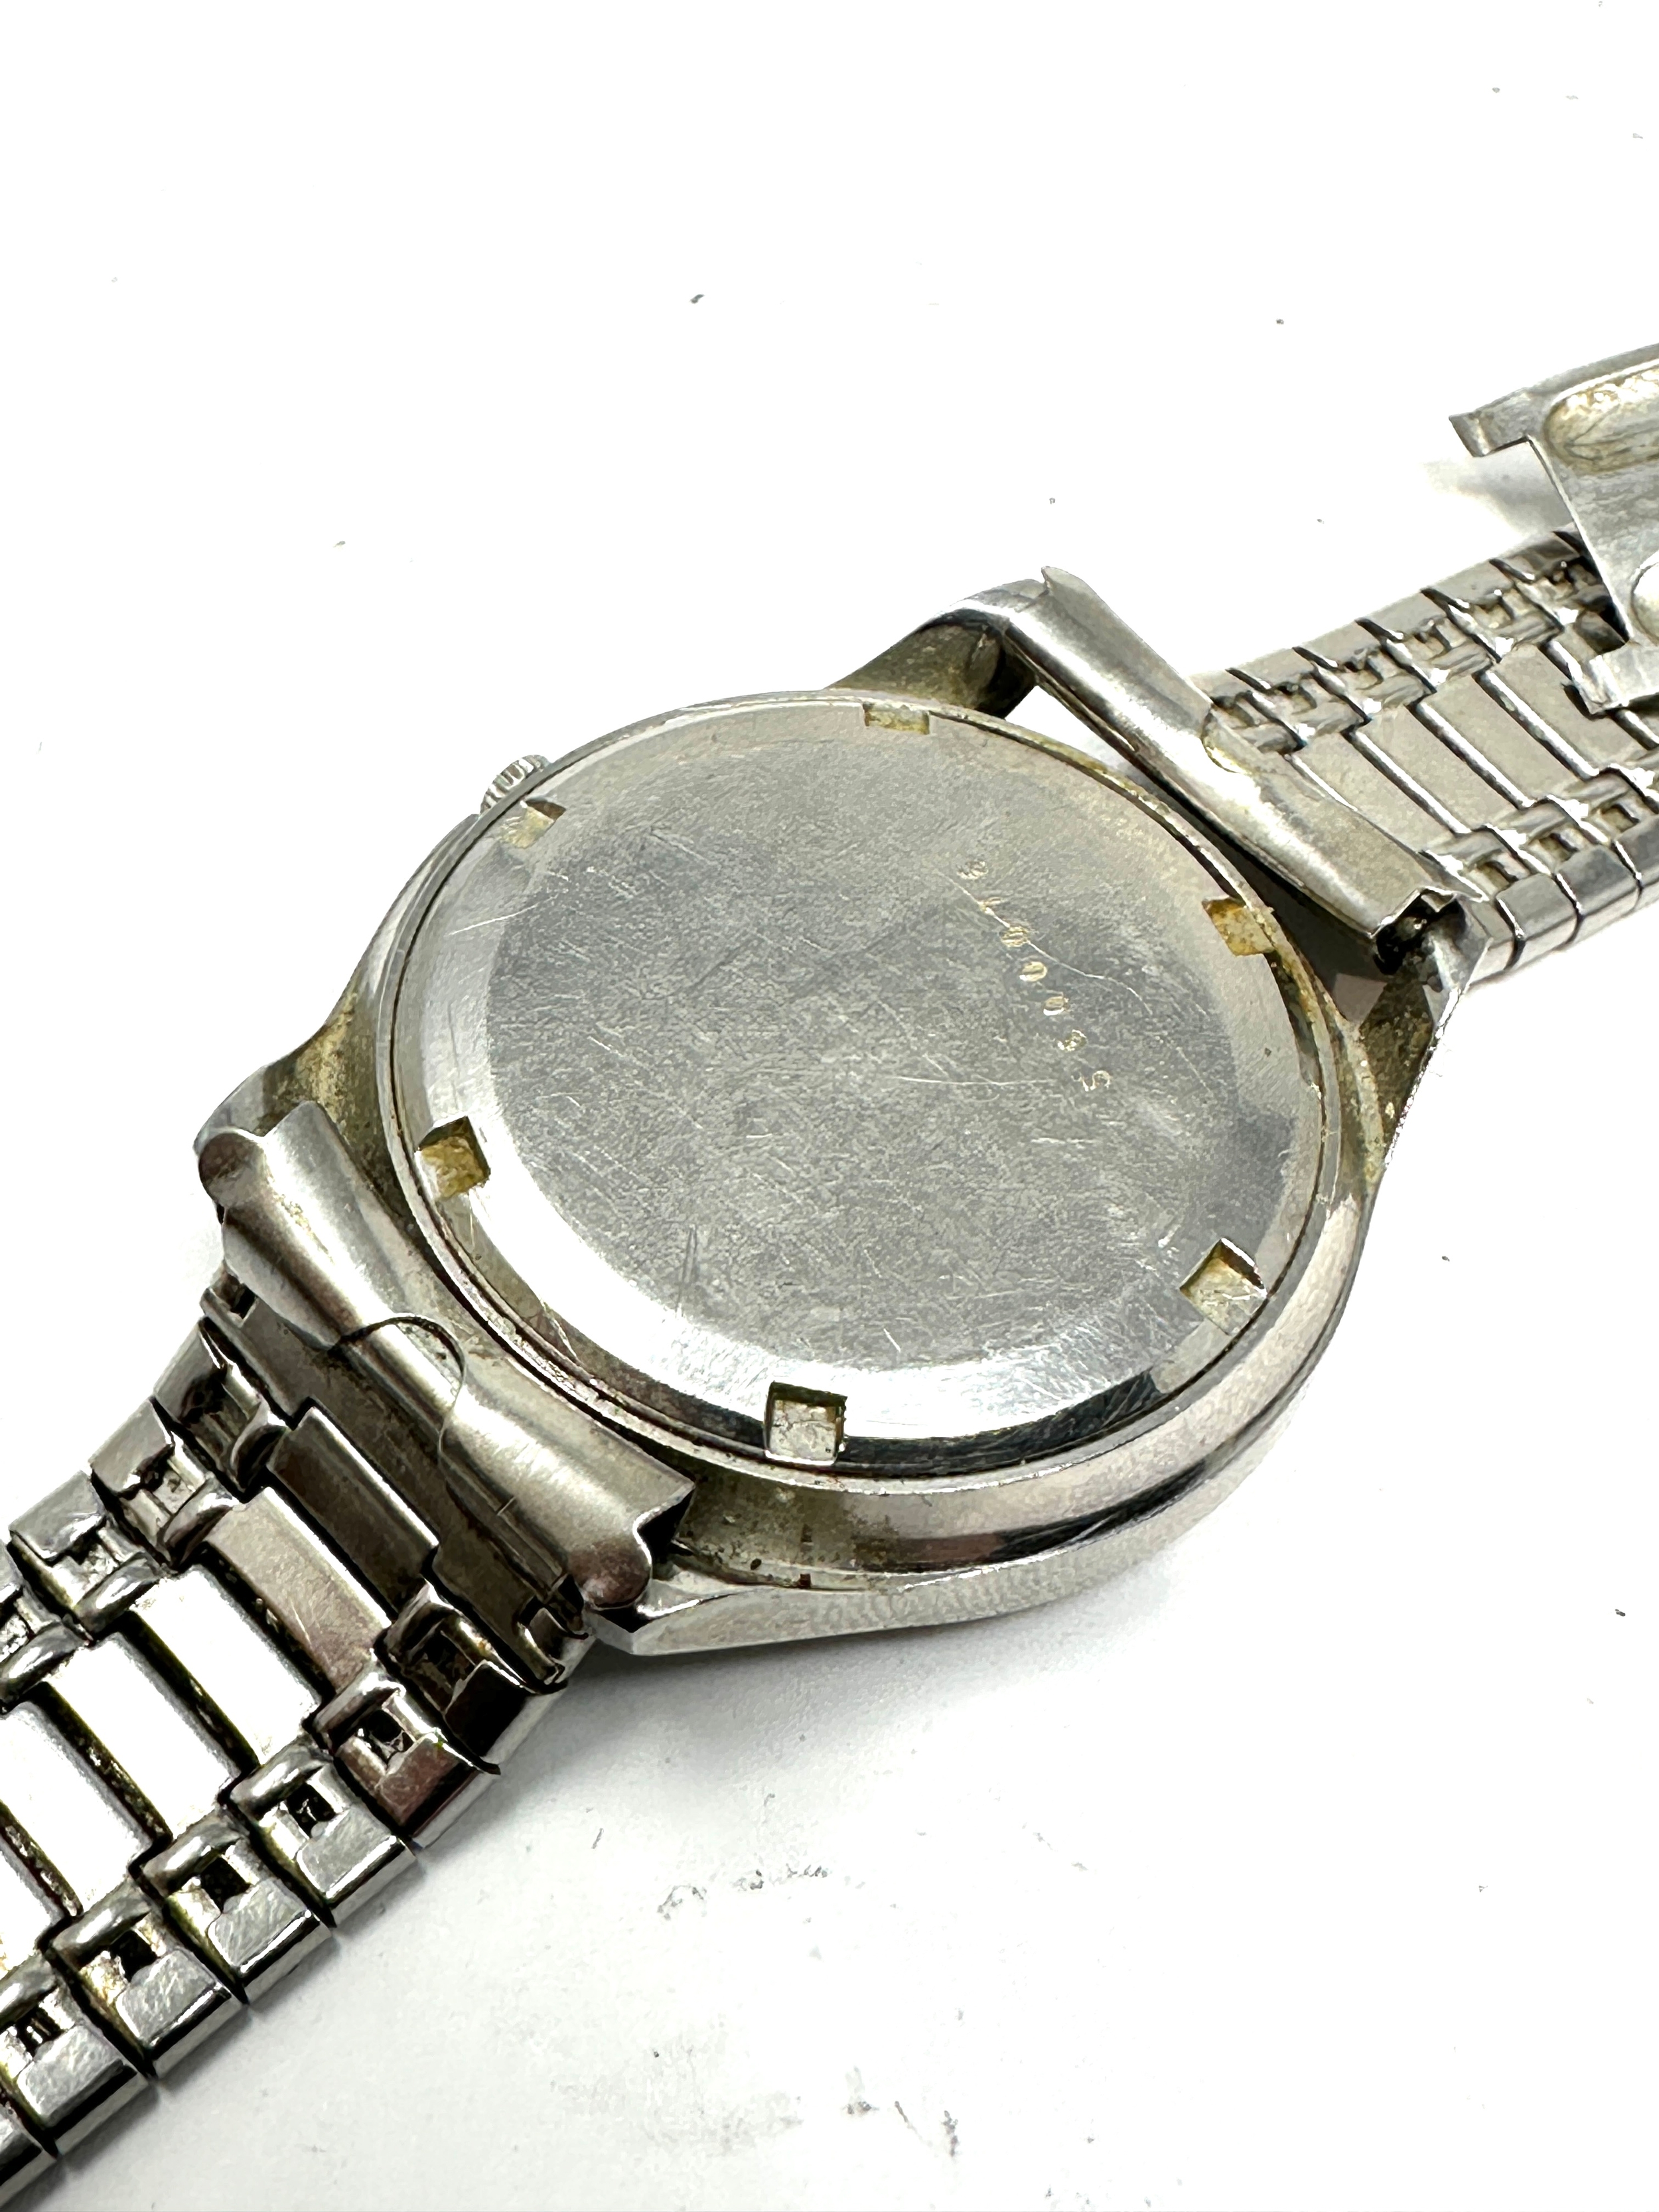 Vintage Seiko Weekdater 26 jewel gents wristwatch the watch is ticking - Image 5 of 6